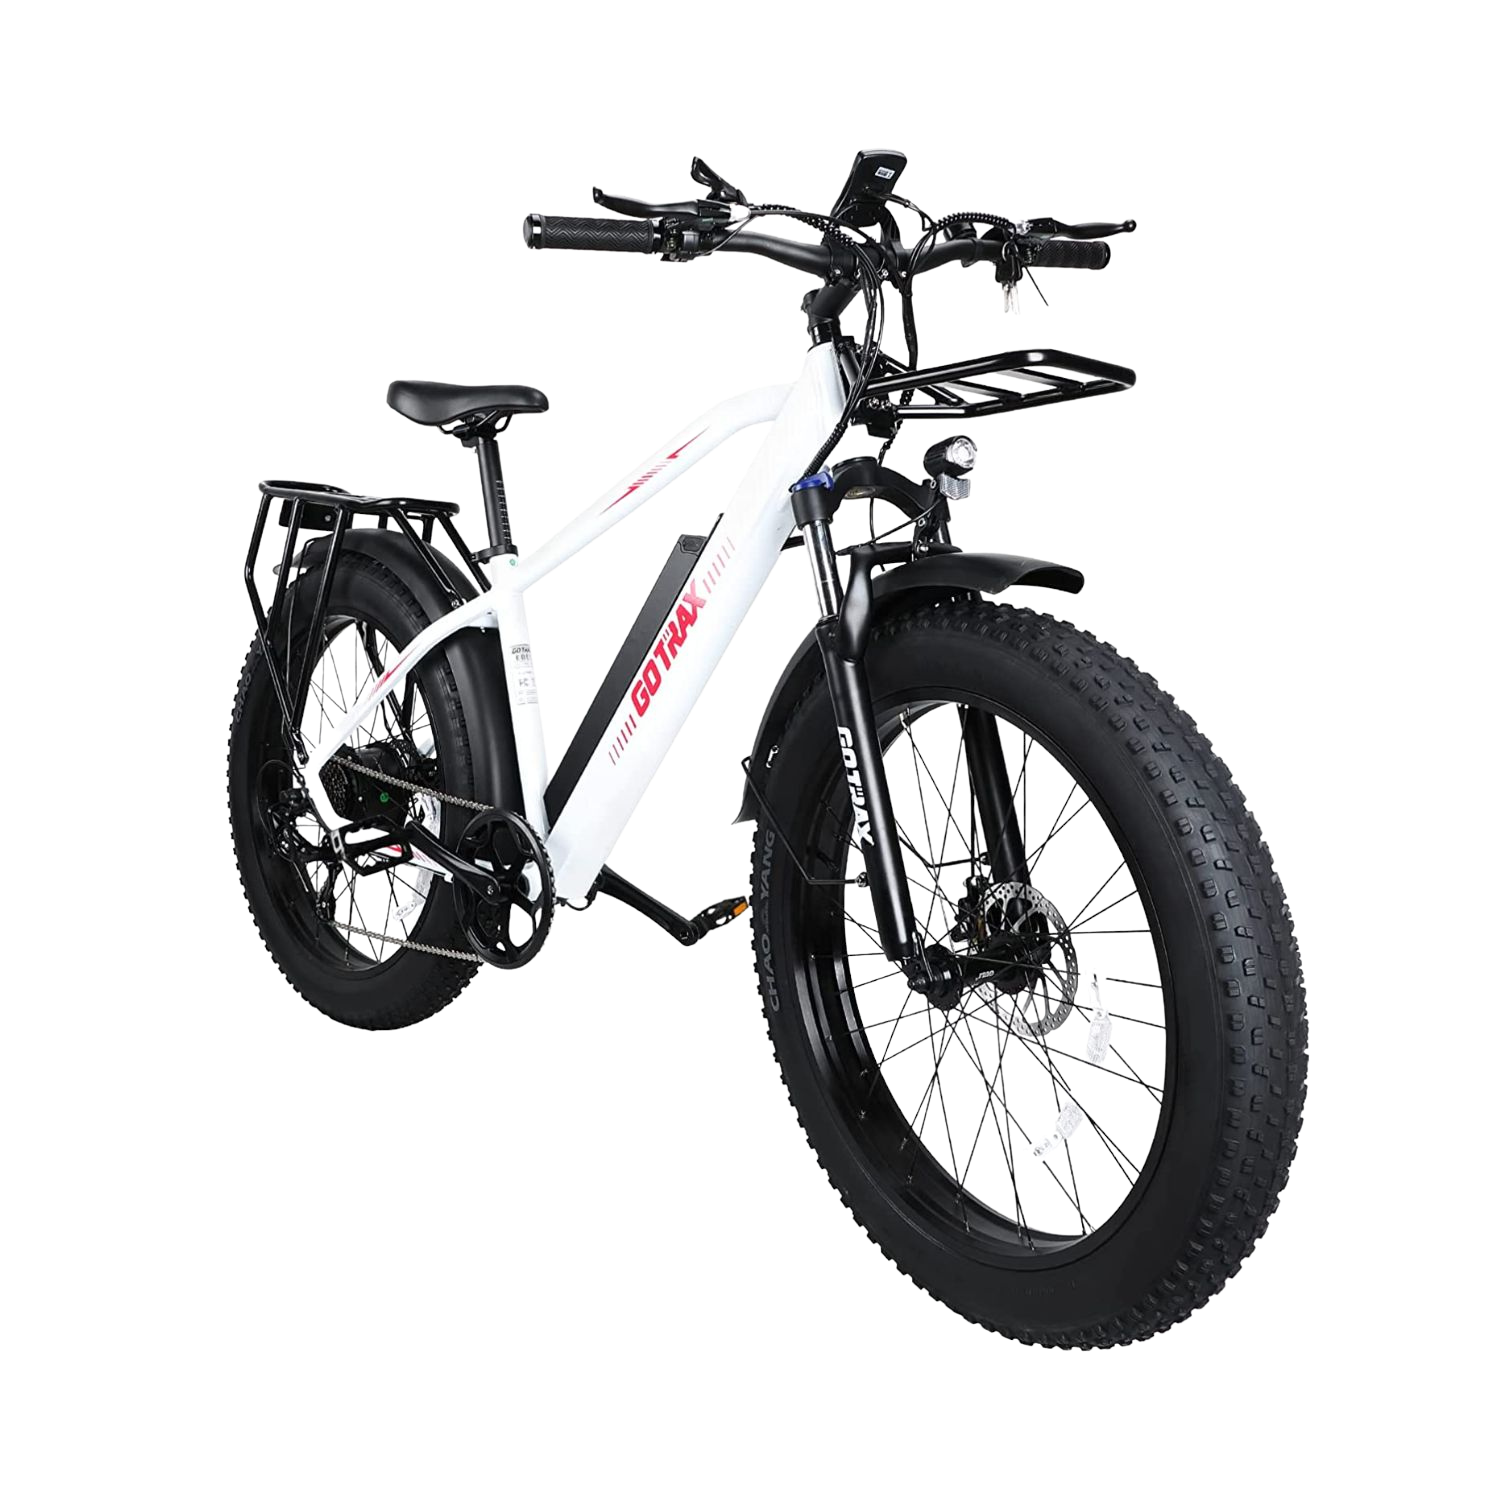 Gotrax EBE5 Adult Multi-terrain Electric Bike 26"-65KM(PAS Range) & 32KPH Max Speed